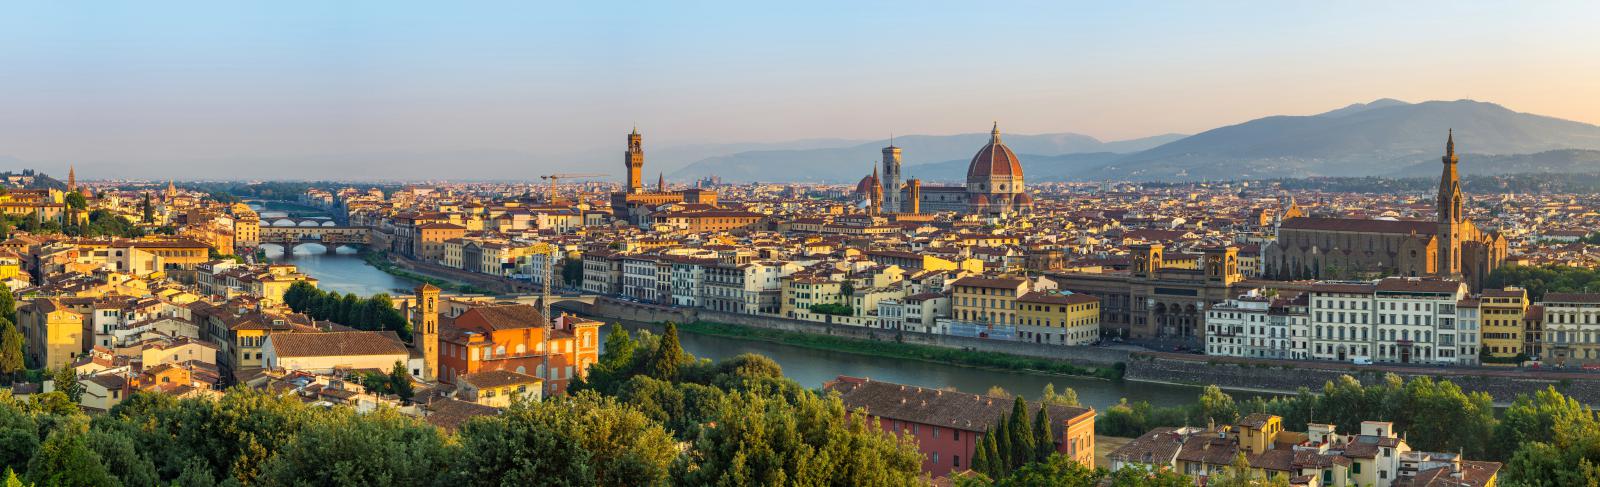 Florence - Skyline - Villa dei Bosconi